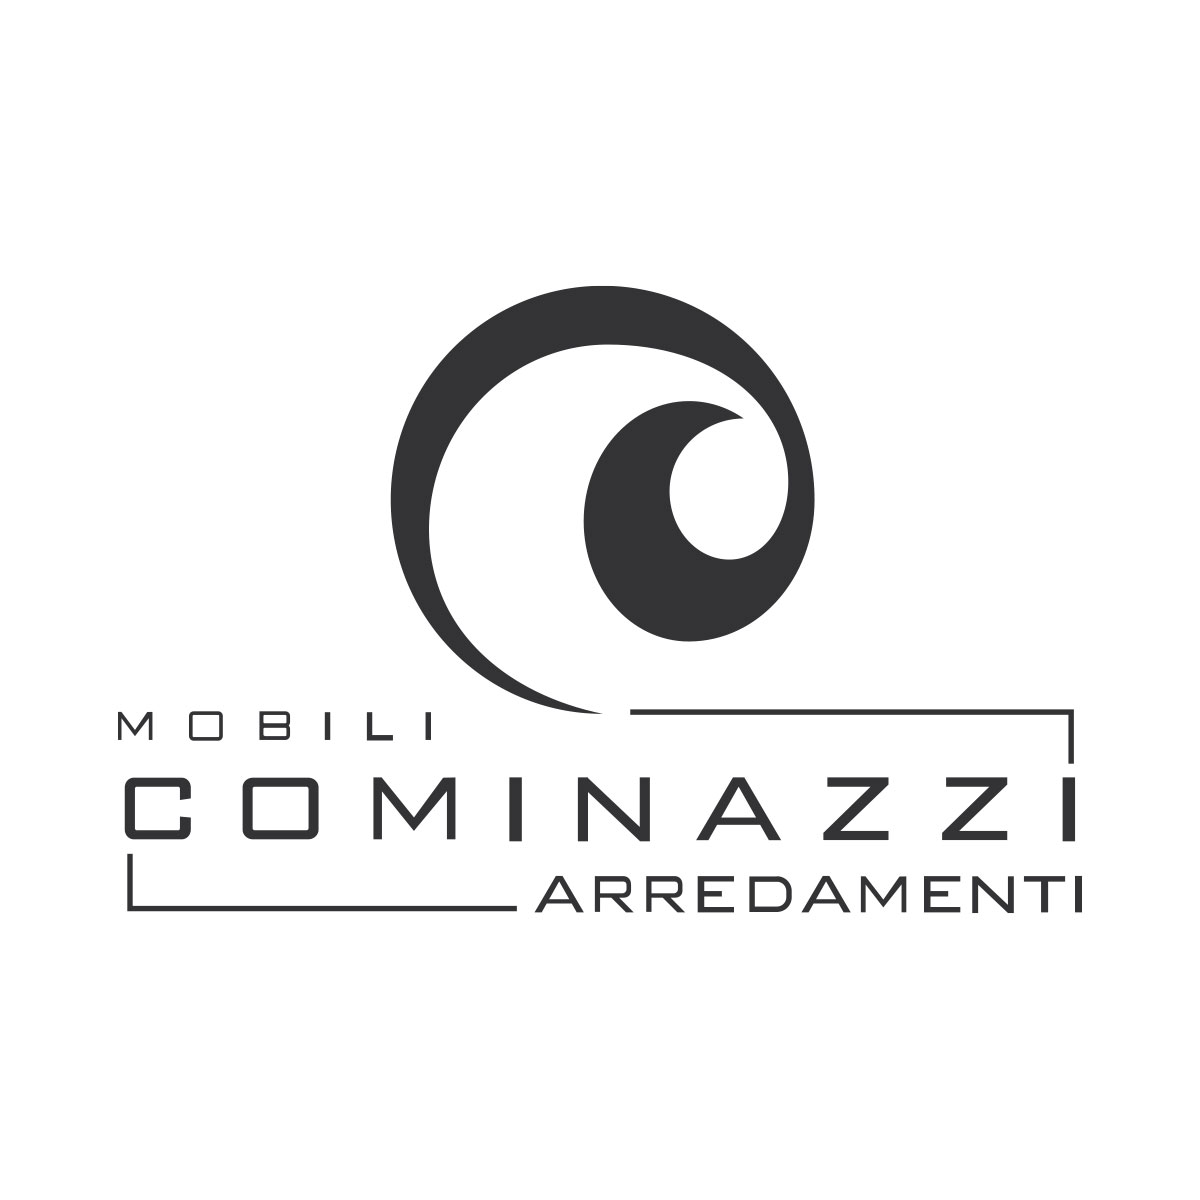 Mobili Cominazzi logo